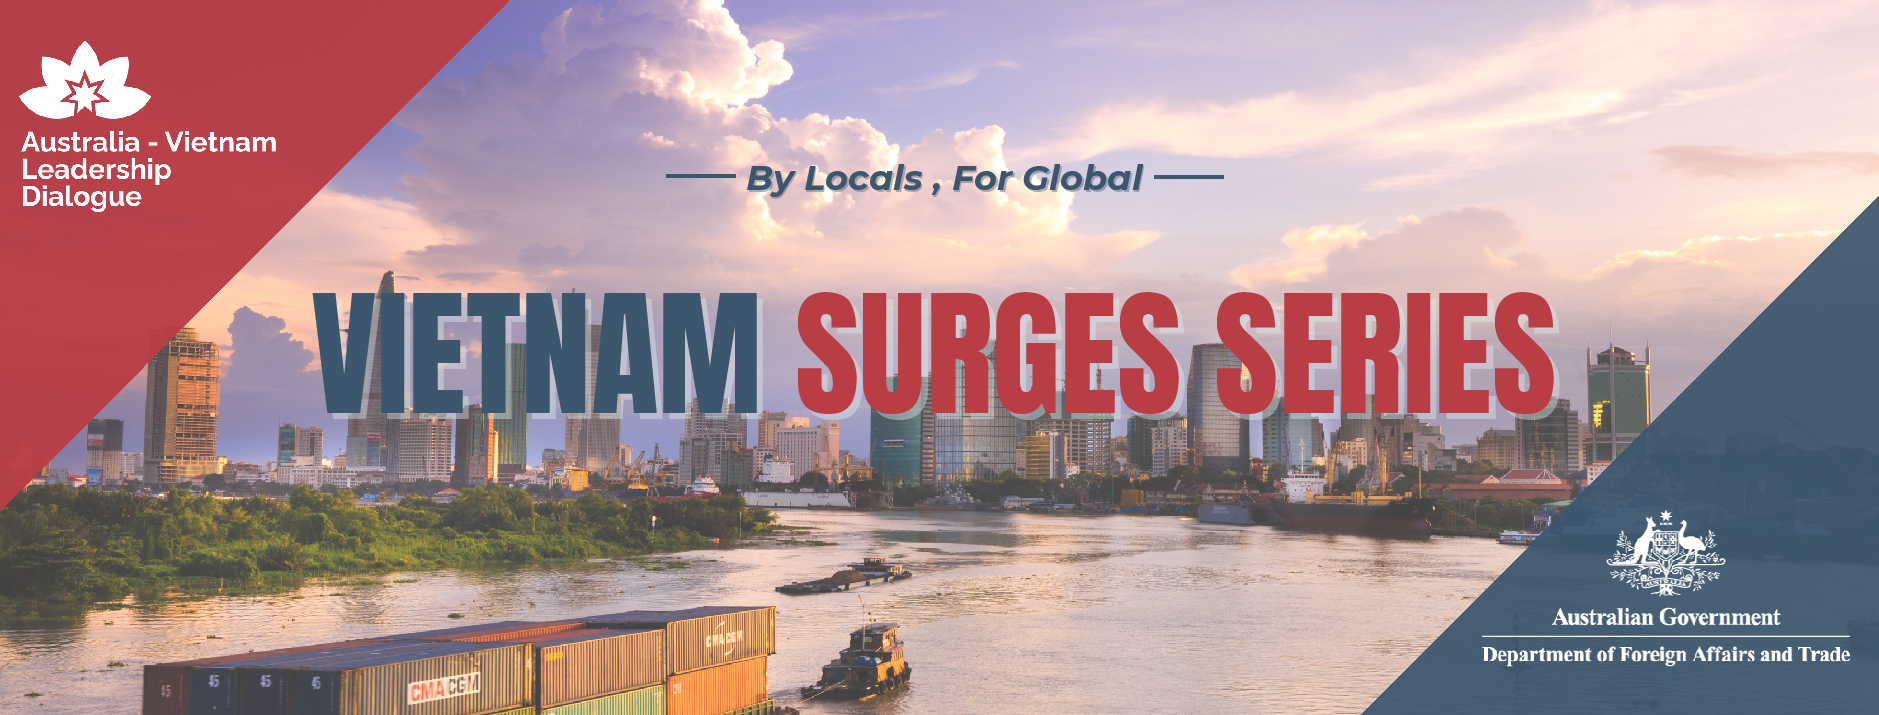 Vietnam-Surges-Series-banner..png